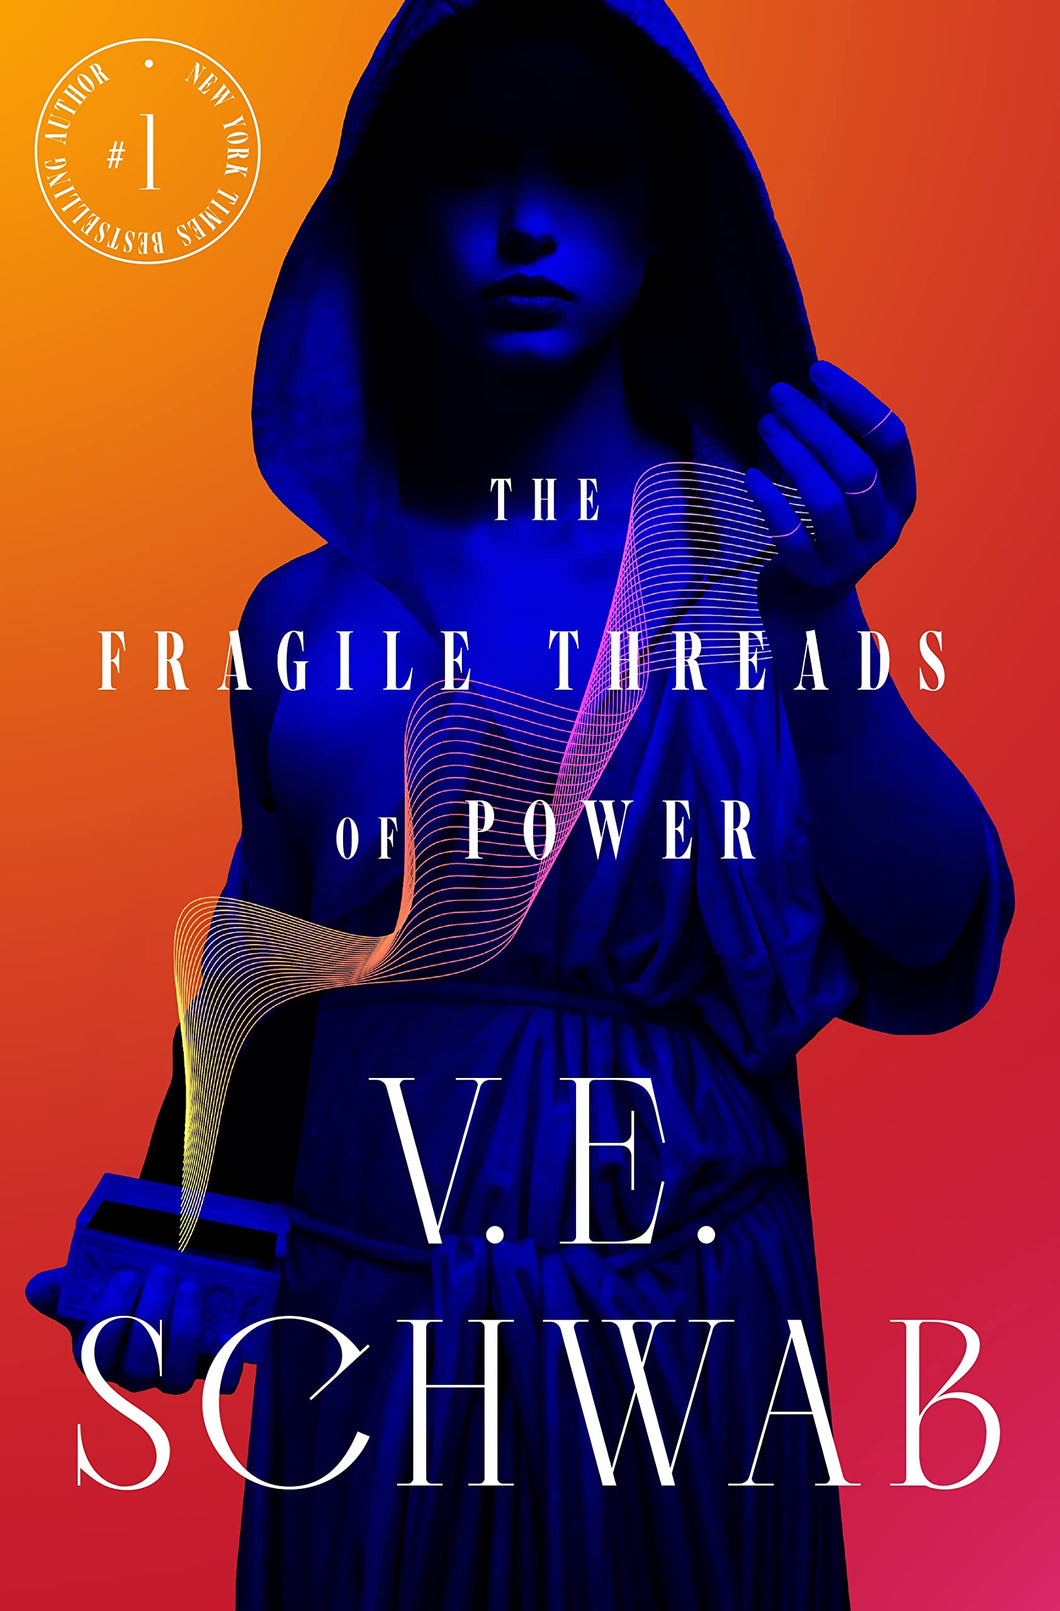 The Fragile Threads of Power by V.E Schwab